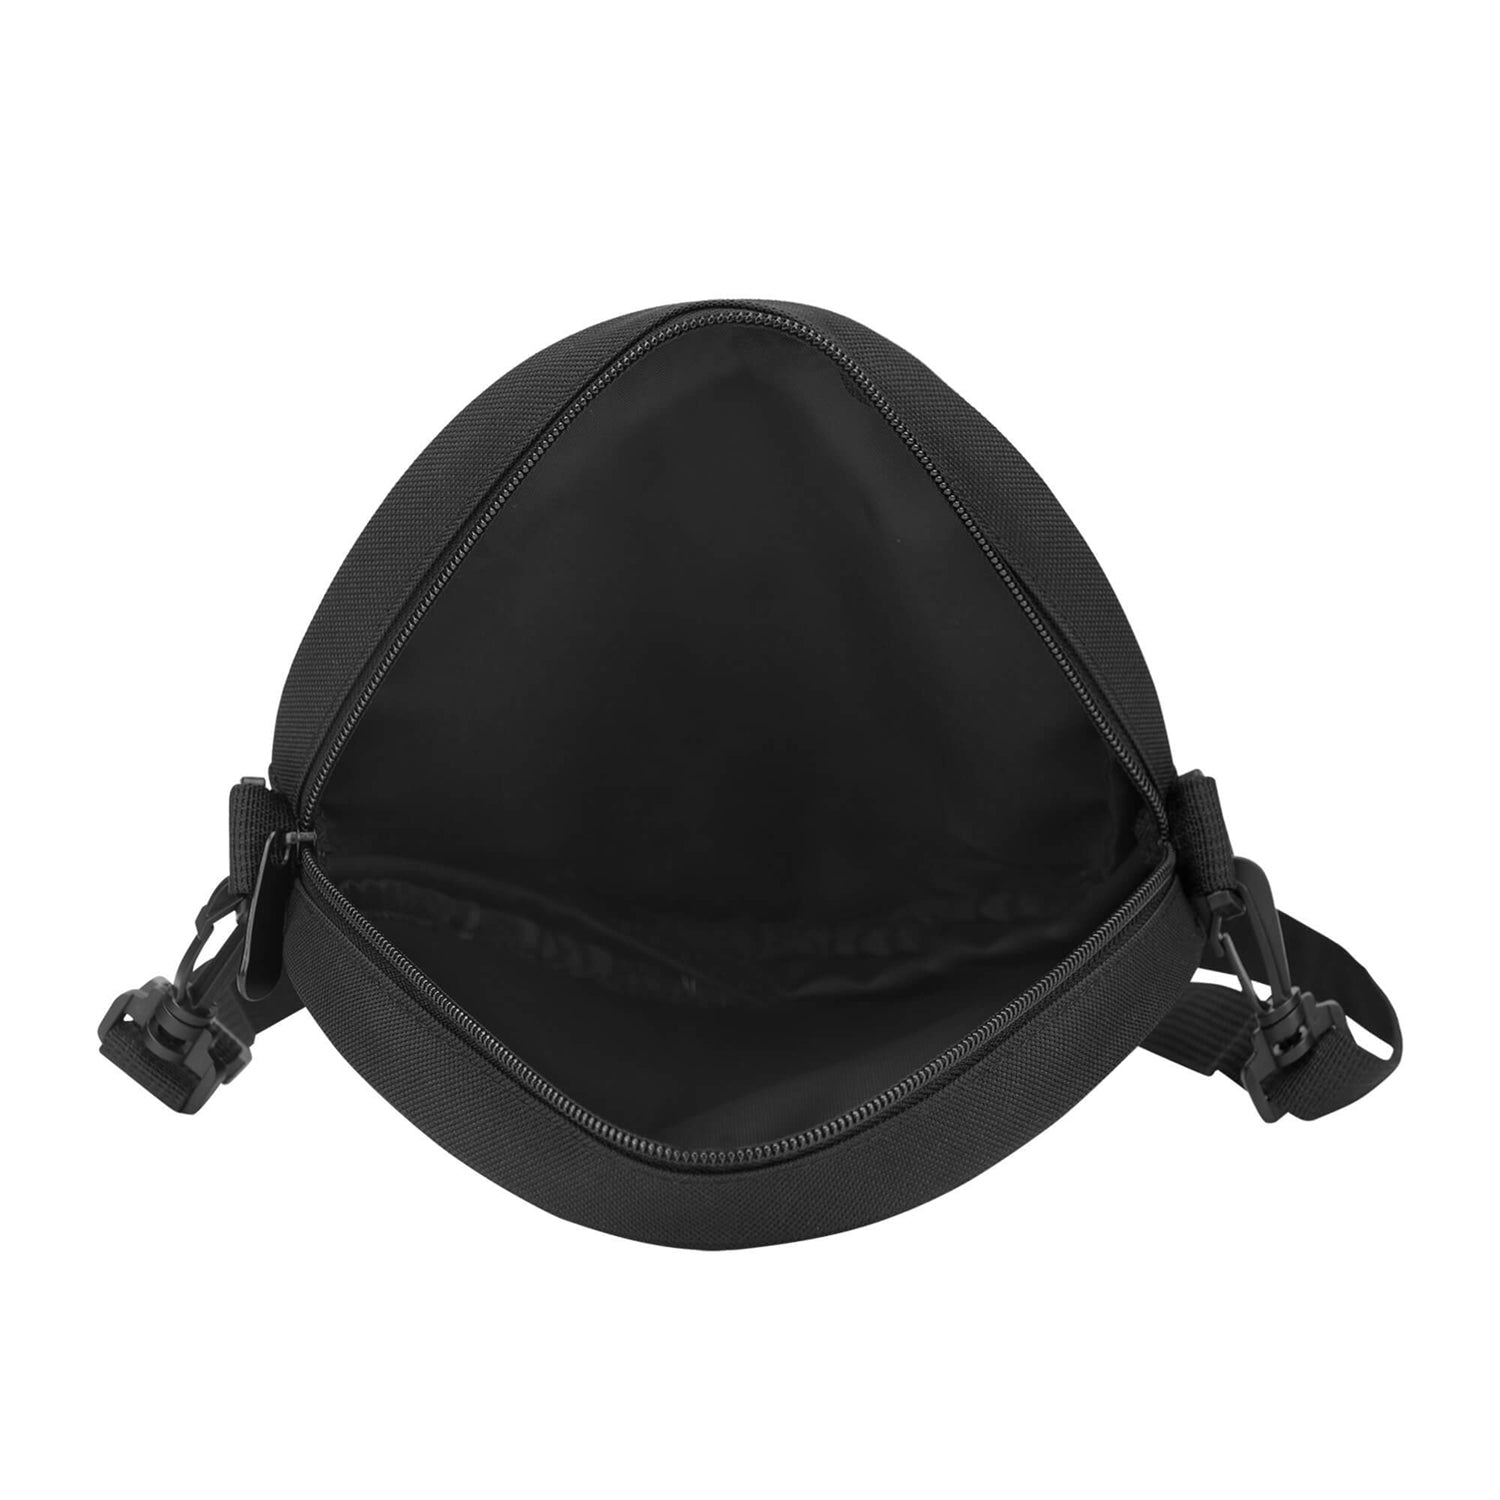 macleay-tartan-round-satchel-bags